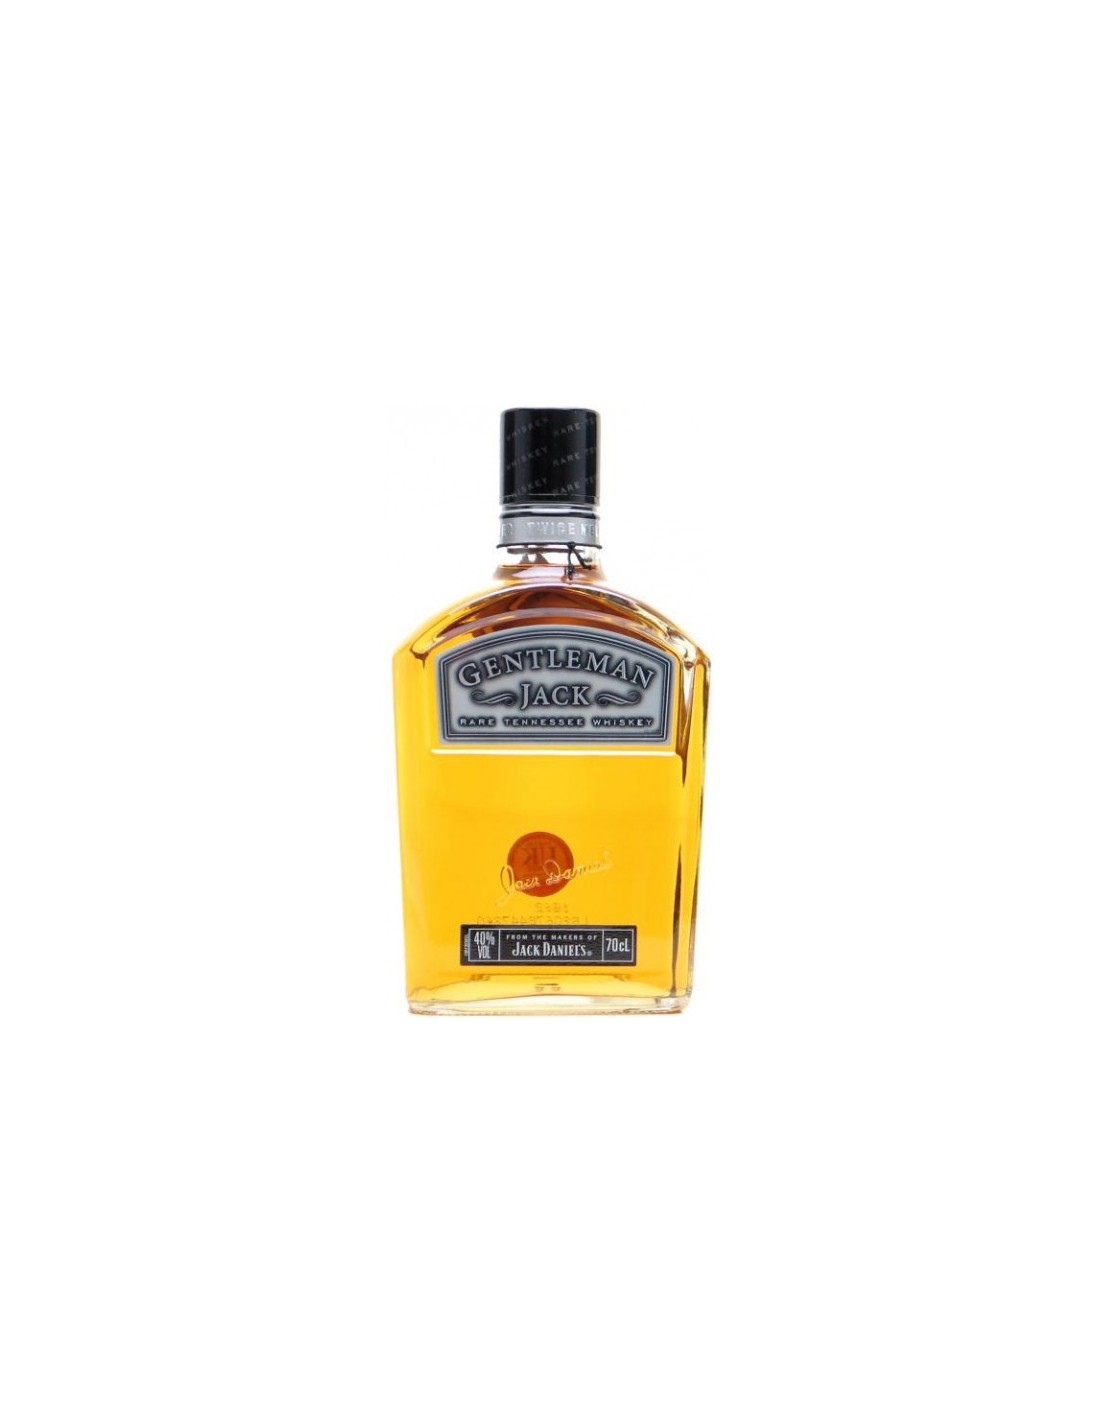 Whisky Gentleman Jack, 0.7L, 40% alc., SUA alcooldiscount.ro